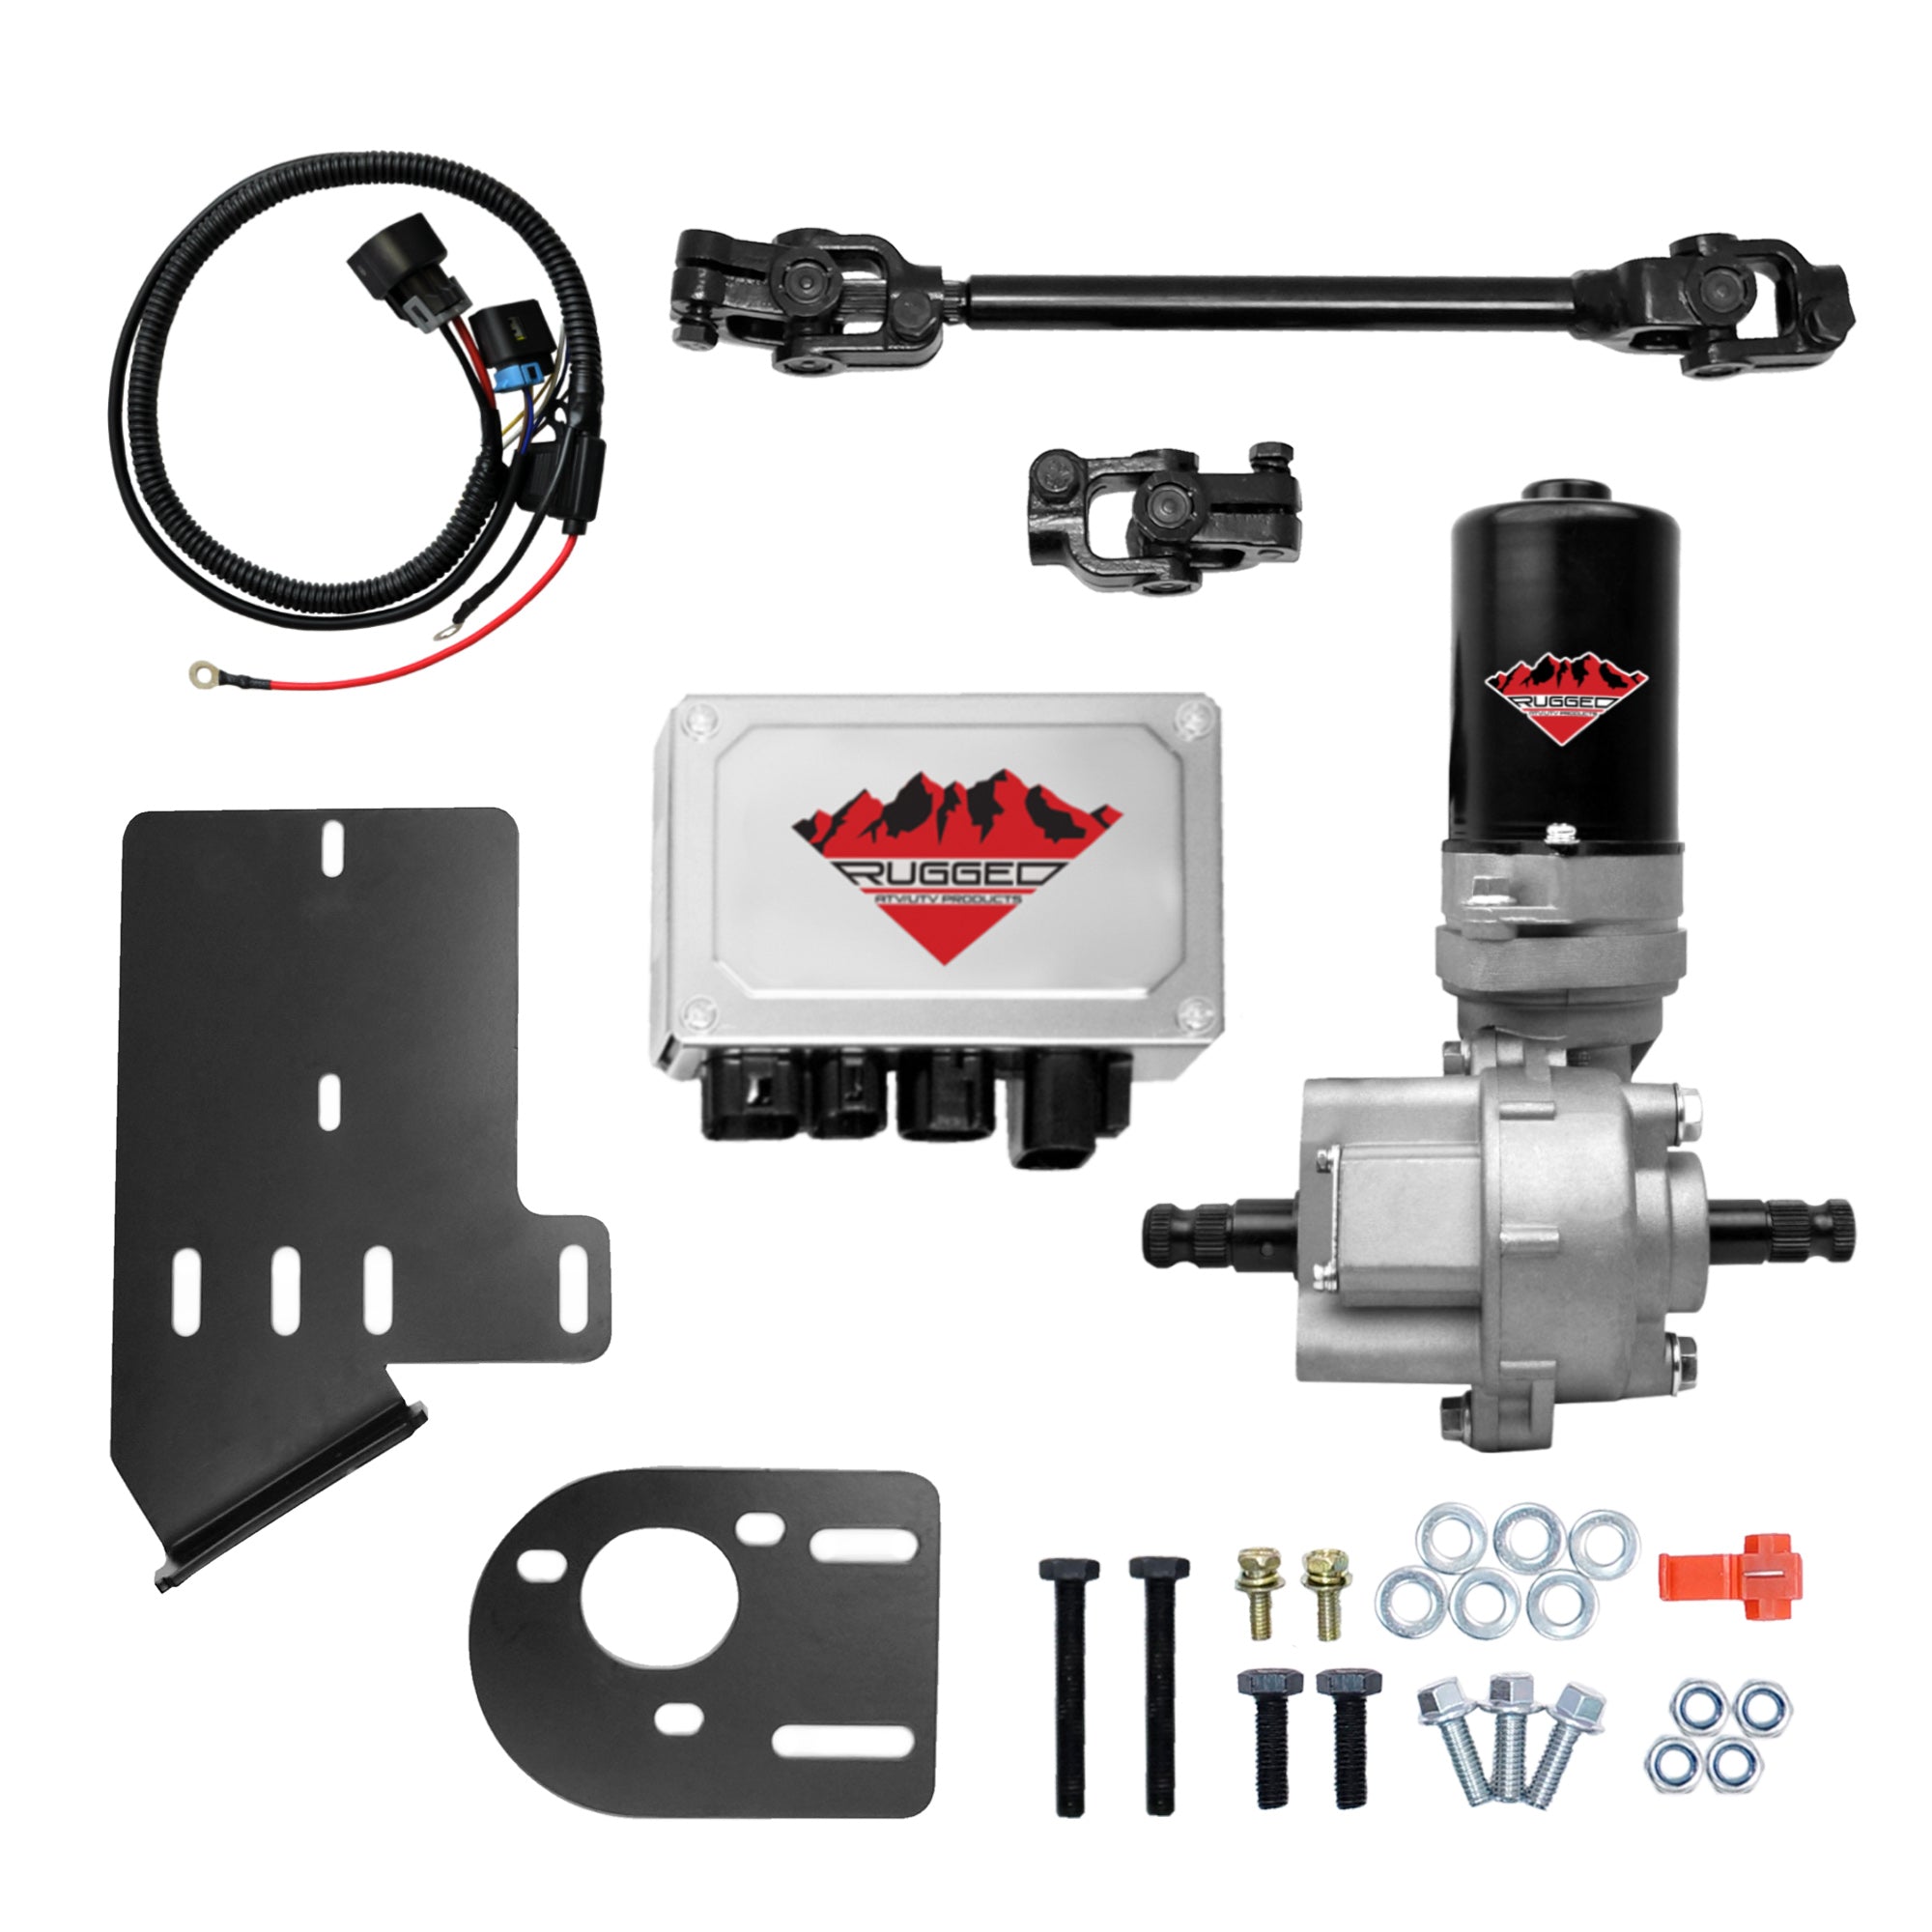 Electric Power Steering Kit for Yamaha Rhino 700 